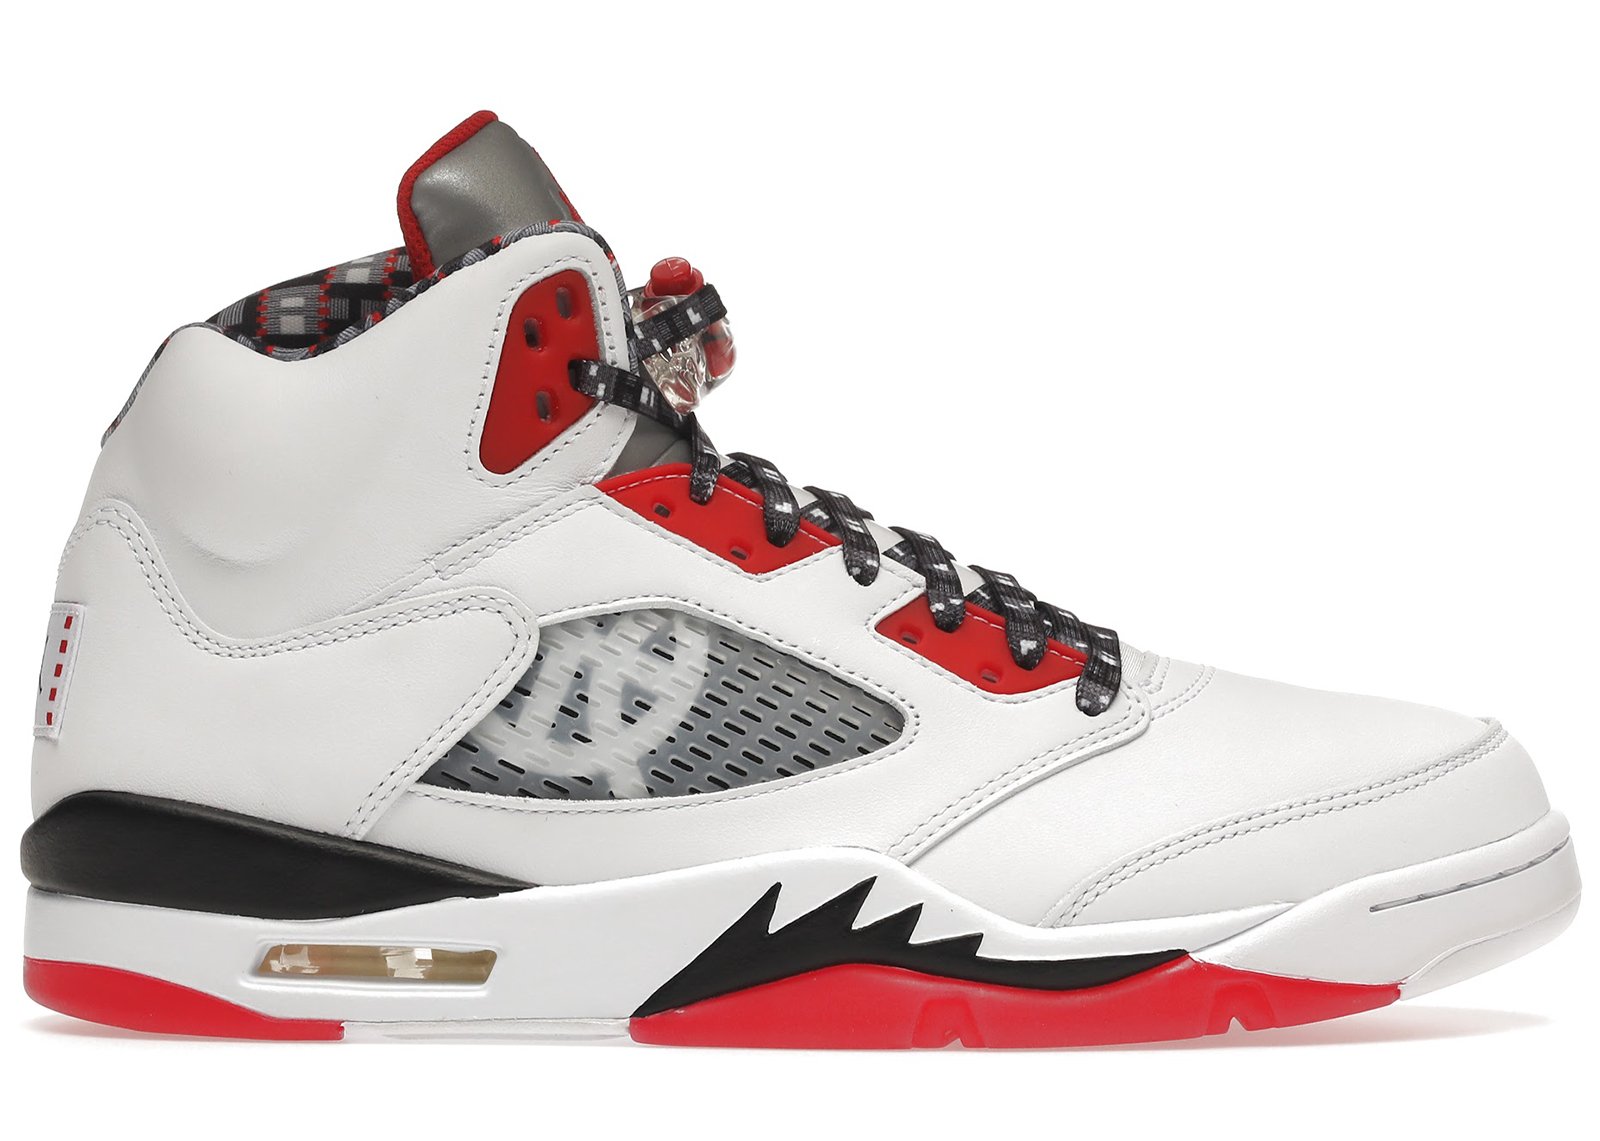 sneakers Jordan 5 Retro Quai 54 (2021)